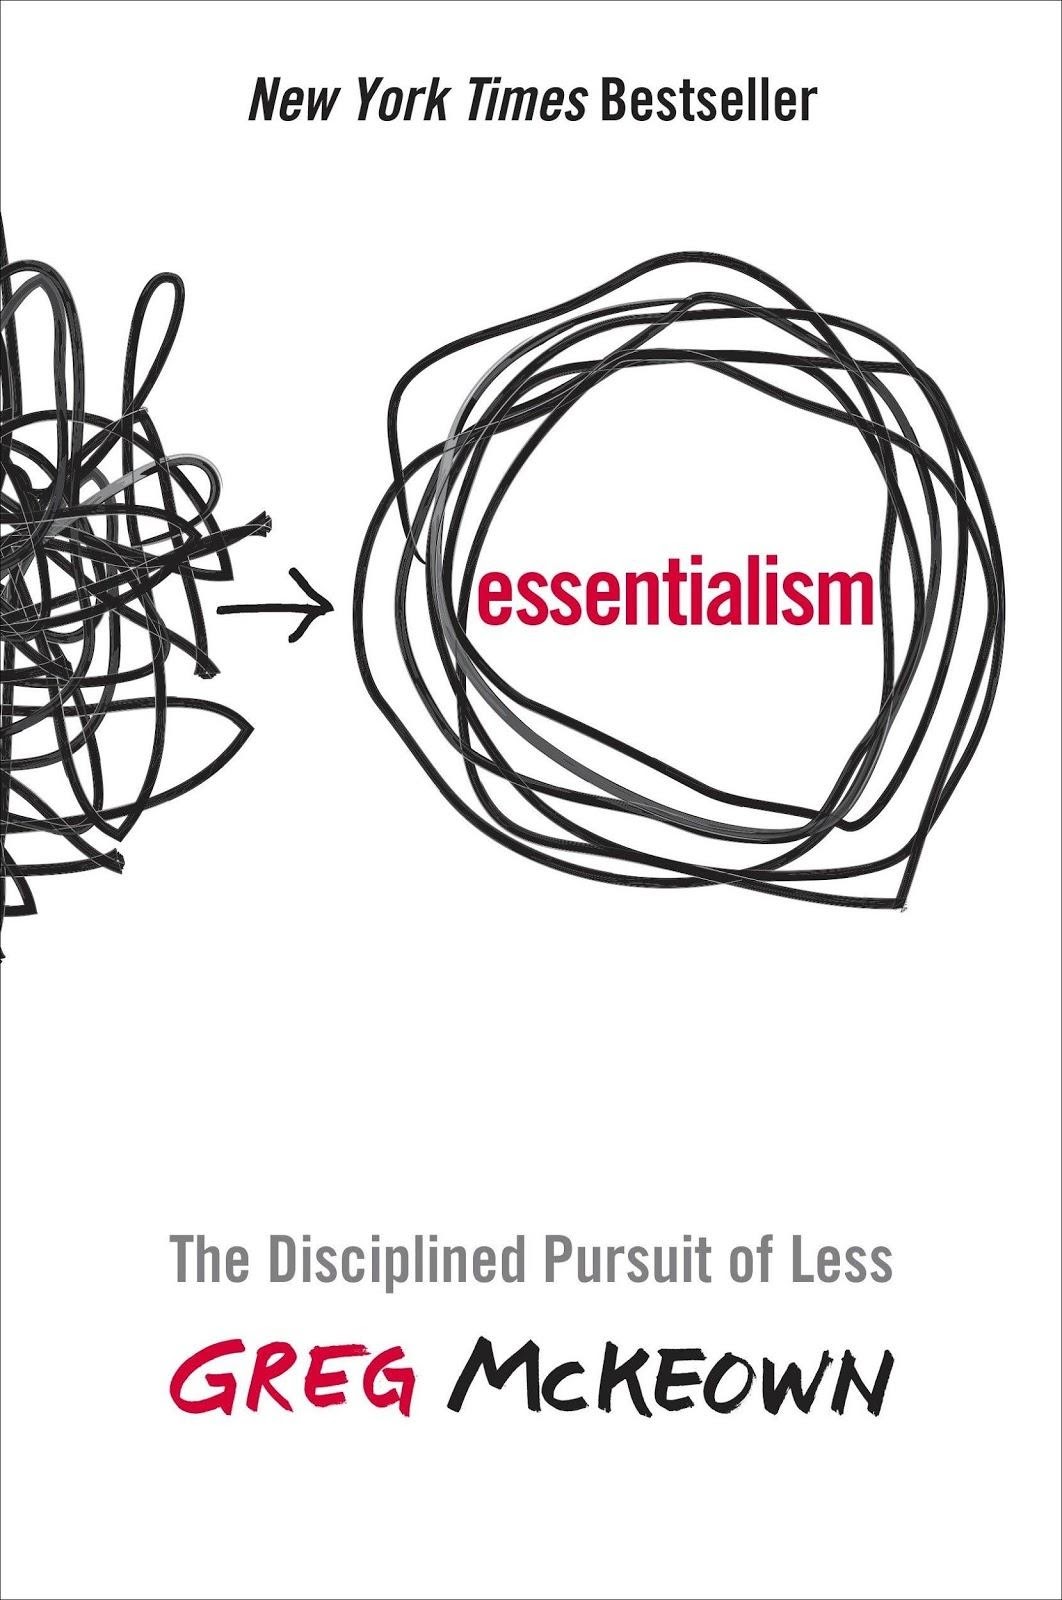 Book “Essentialism”